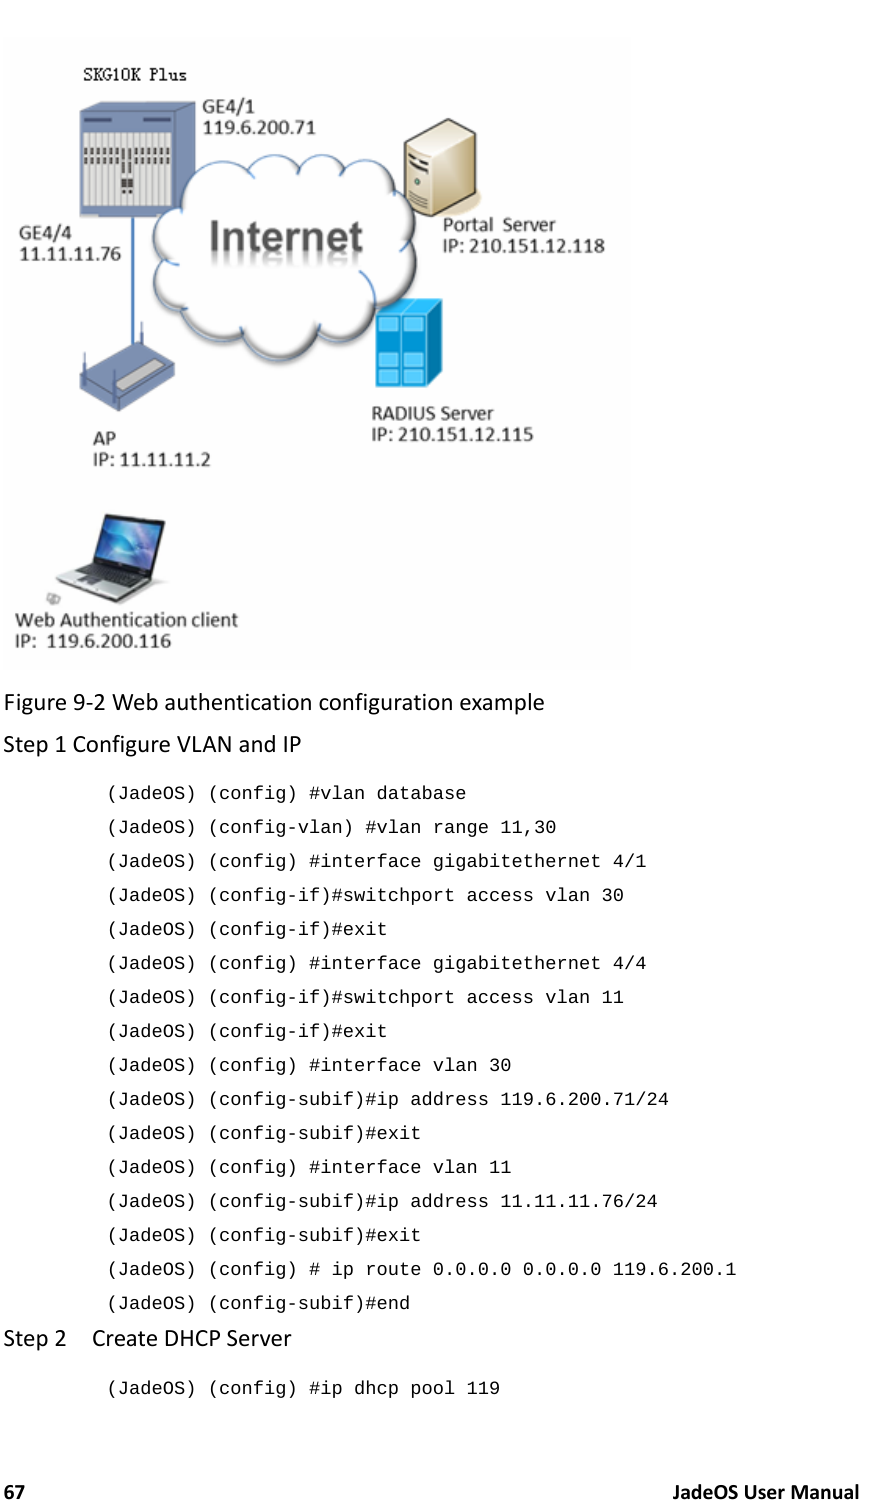 67JadeOSUserManual Figure9‐2WebauthenticationconfigurationexampleStep1ConfigureVLANandIP(JadeOS) (config) #vlan database (JadeOS) (config-vlan) #vlan range 11,30 (JadeOS) (config) #interface gigabitethernet 4/1 (JadeOS) (config-if)#switchport access vlan 30 (JadeOS) (config-if)#exit        (JadeOS) (config) #interface gigabitethernet 4/4 (JadeOS) (config-if)#switchport access vlan 11 (JadeOS) (config-if)#exit (JadeOS) (config) #interface vlan 30 (JadeOS) (config-subif)#ip address 119.6.200.71/24 (JadeOS) (config-subif)#exit (JadeOS) (config) #interface vlan 11 (JadeOS) (config-subif)#ip address 11.11.11.76/24 (JadeOS) (config-subif)#exit (JadeOS) (config) # ip route 0.0.0.0 0.0.0.0 119.6.200.1 (JadeOS) (config-subif)#end Step2CreateDHCPServer(JadeOS) (config) #ip dhcp pool 119 